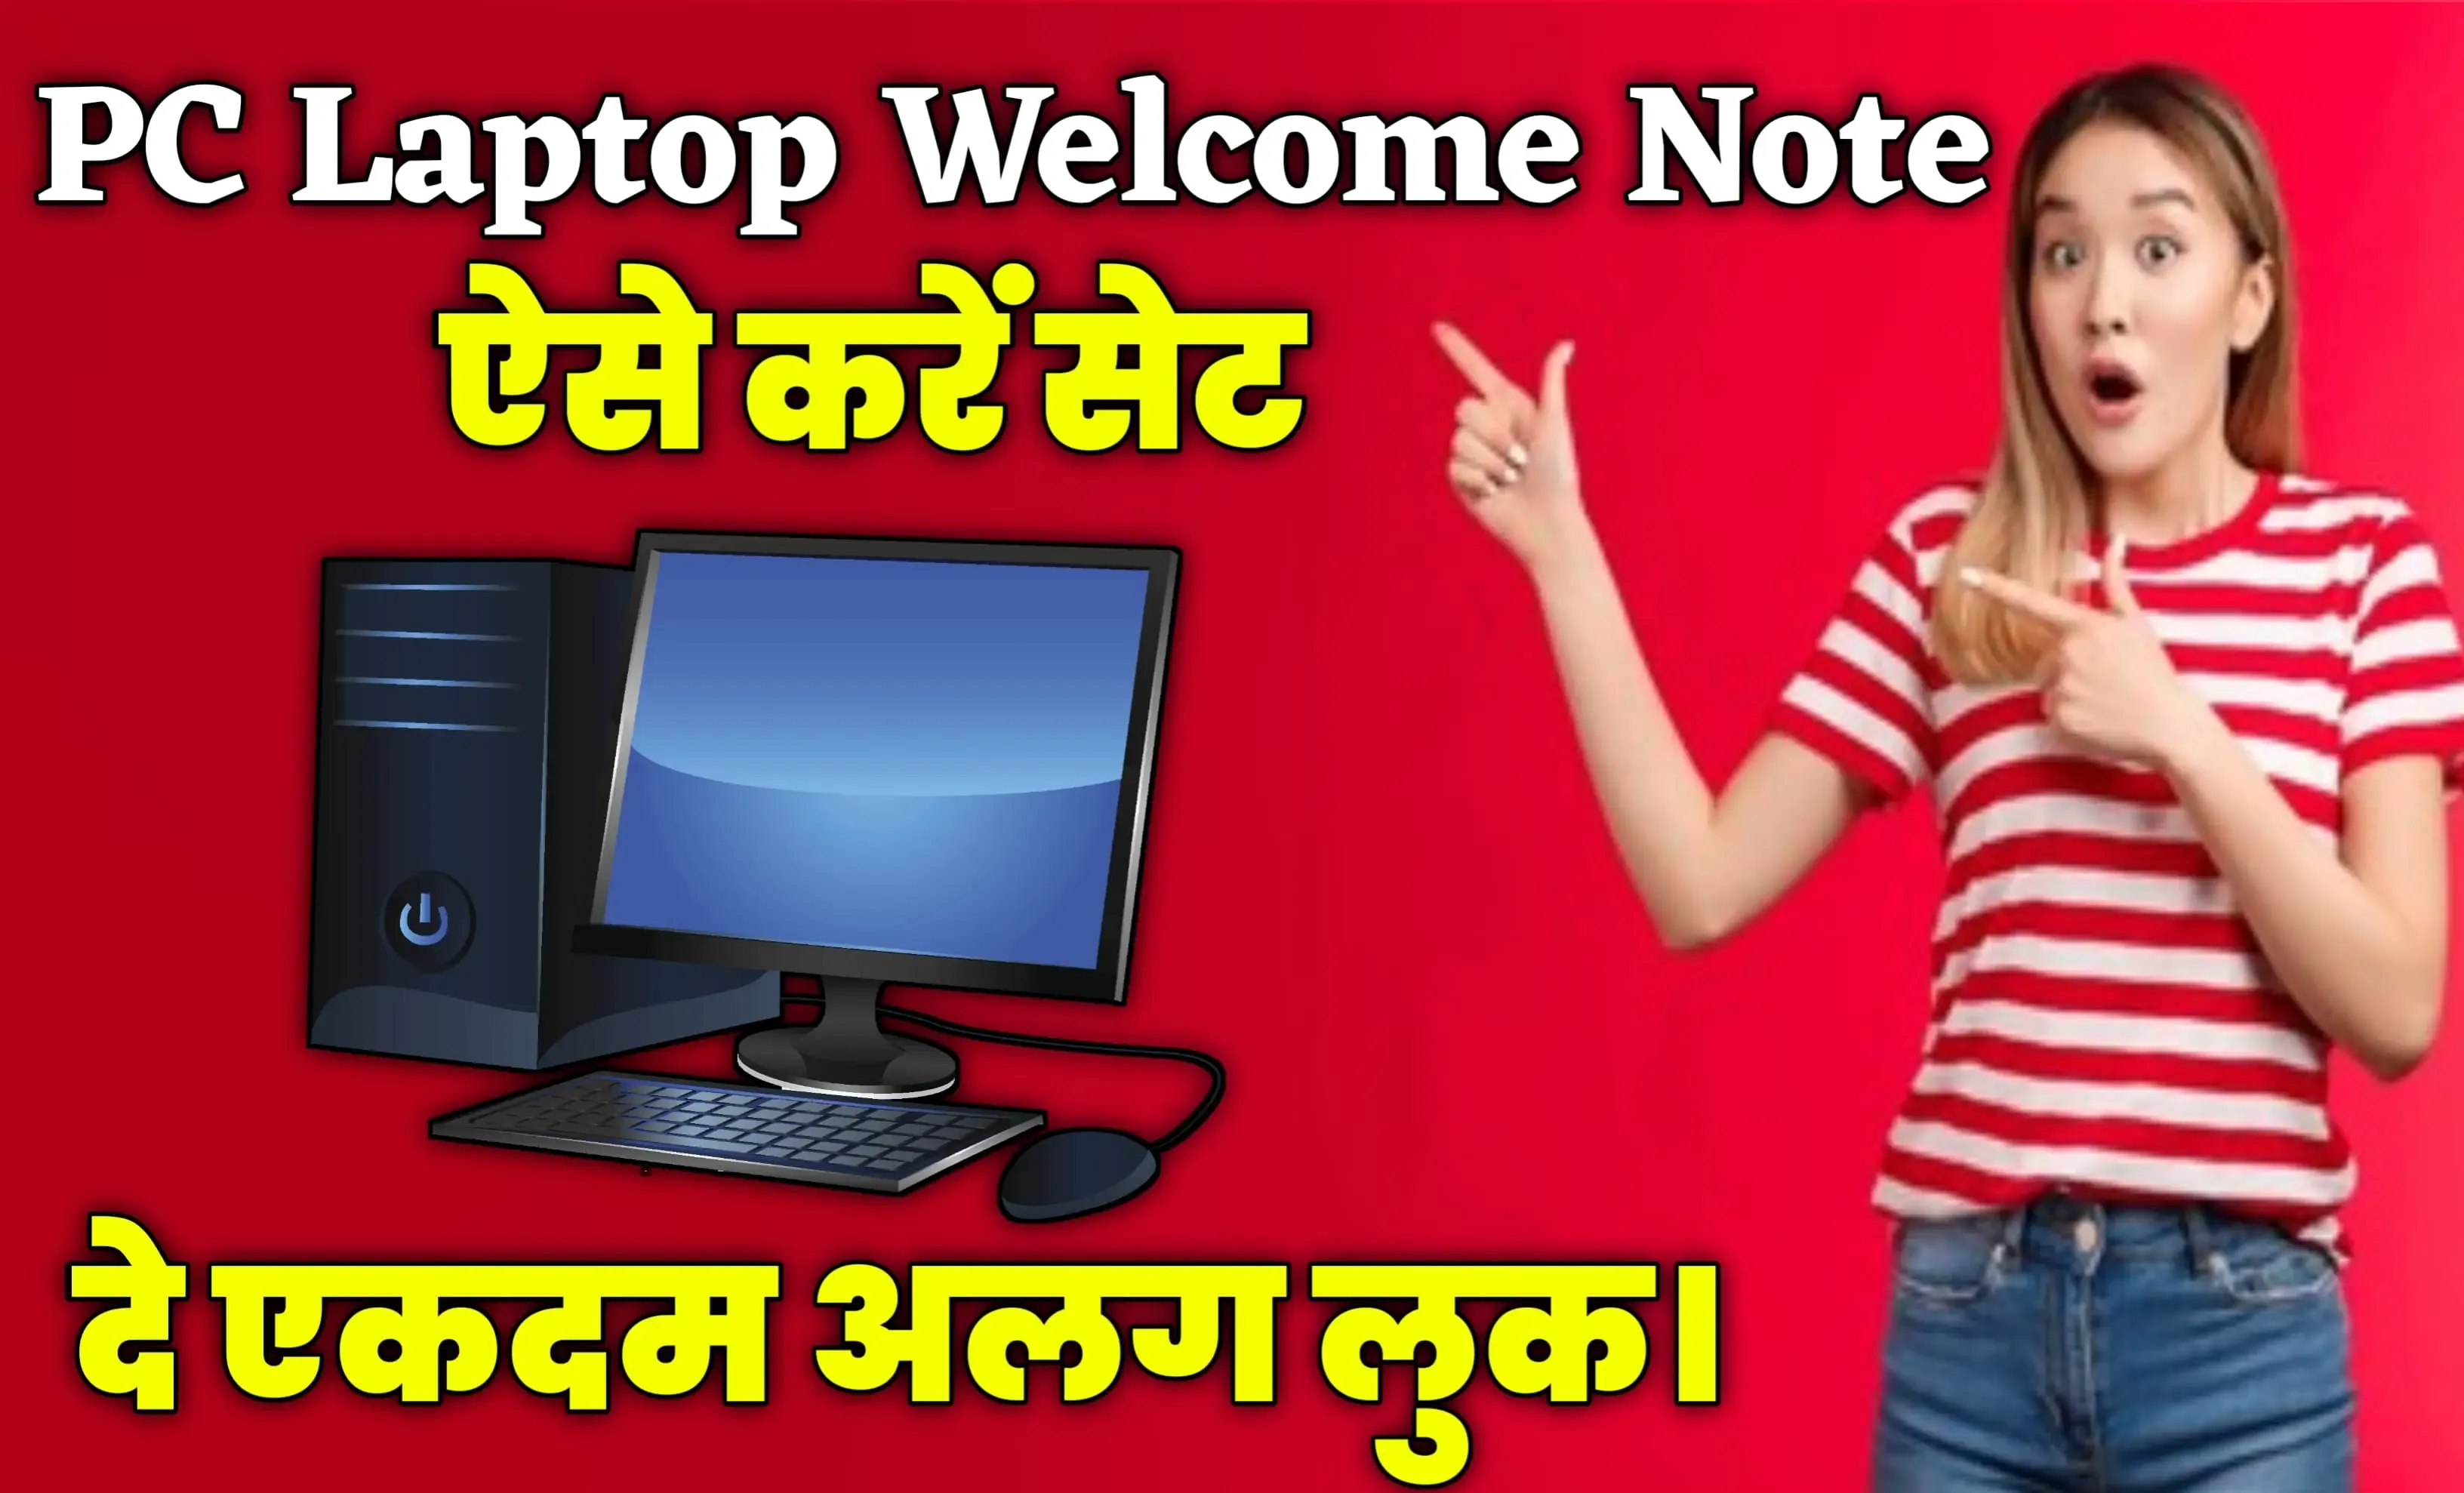 Make Your PC Welcome You - आपका PC Laptop आपका करेगा स्वागत